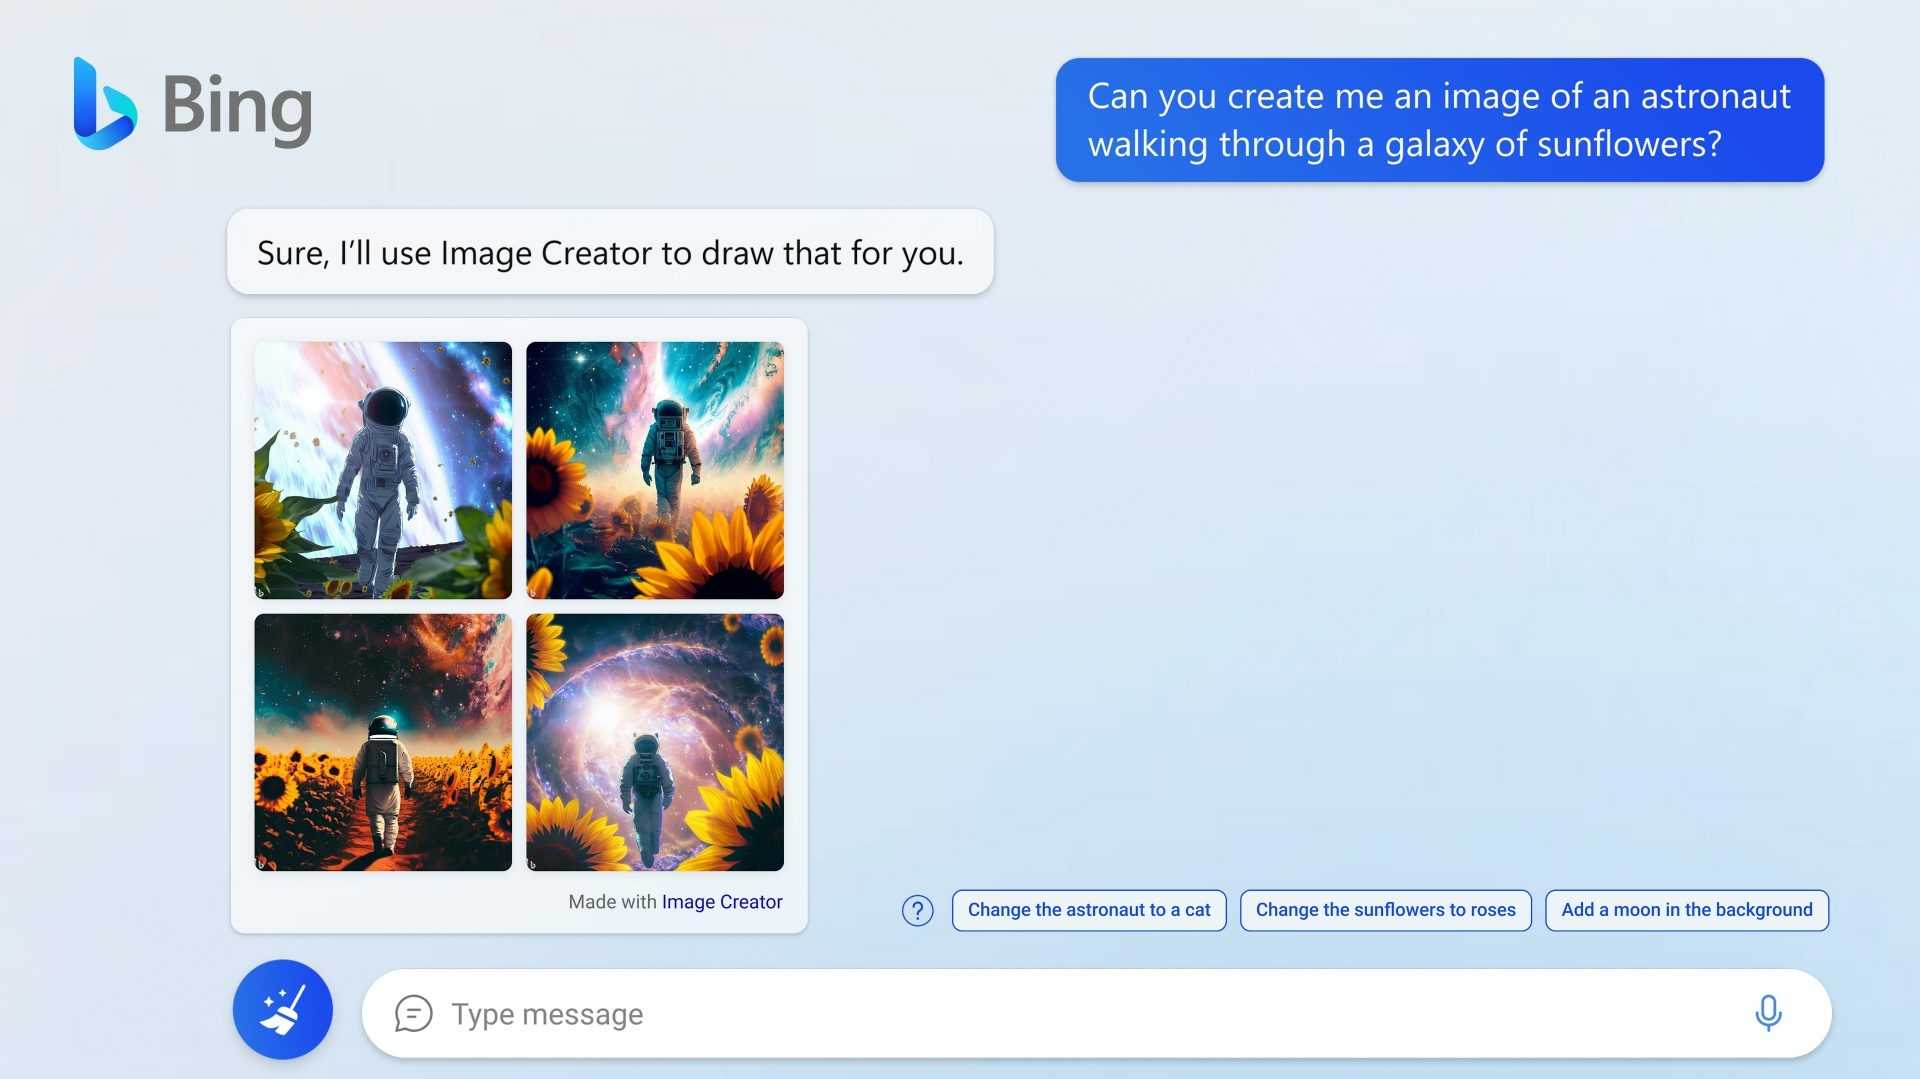 Rechts oben der Befehl "Can you create me an image of an astronaut walking through a galaxy of sunflowers?" Links vier einschlägige Bilder